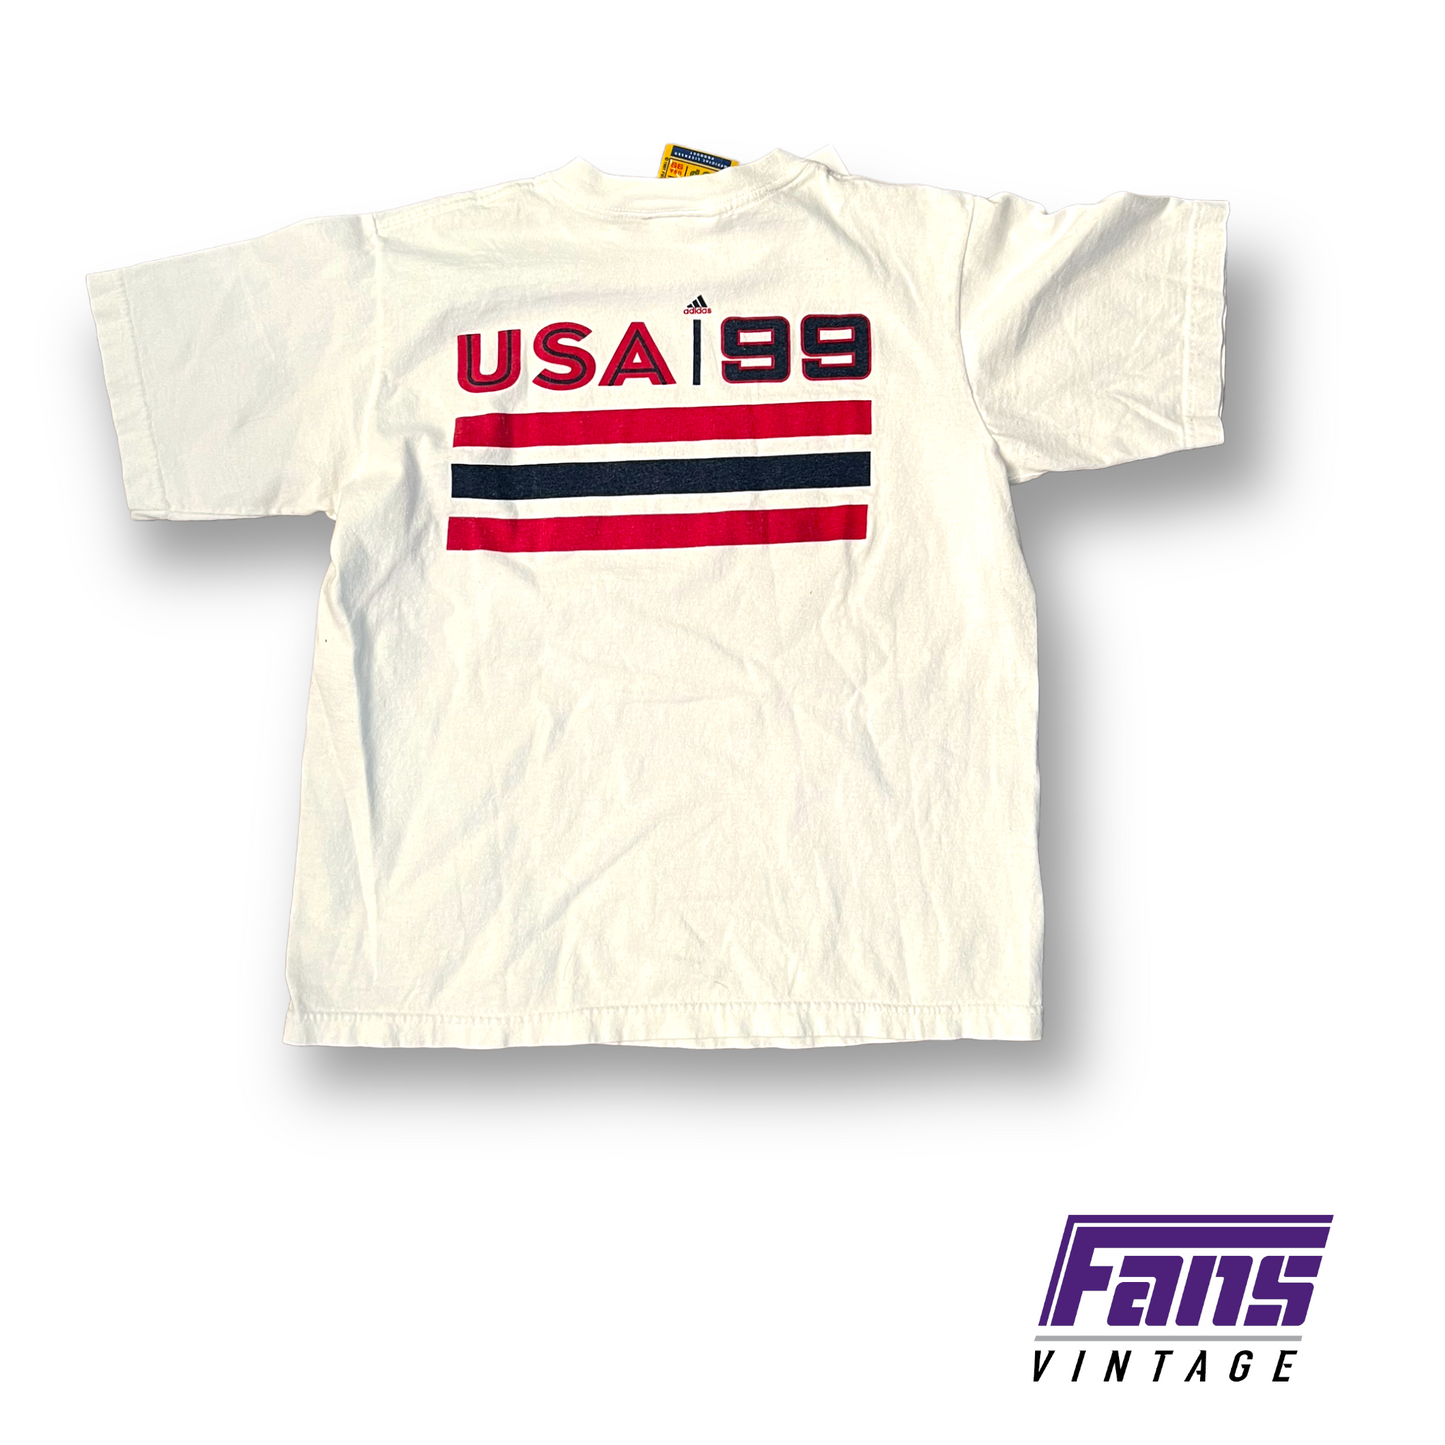 RARE! Team USA Soccer Women's World Cup CHAMPIONS - 1999 Kid's Size Adidas Tee